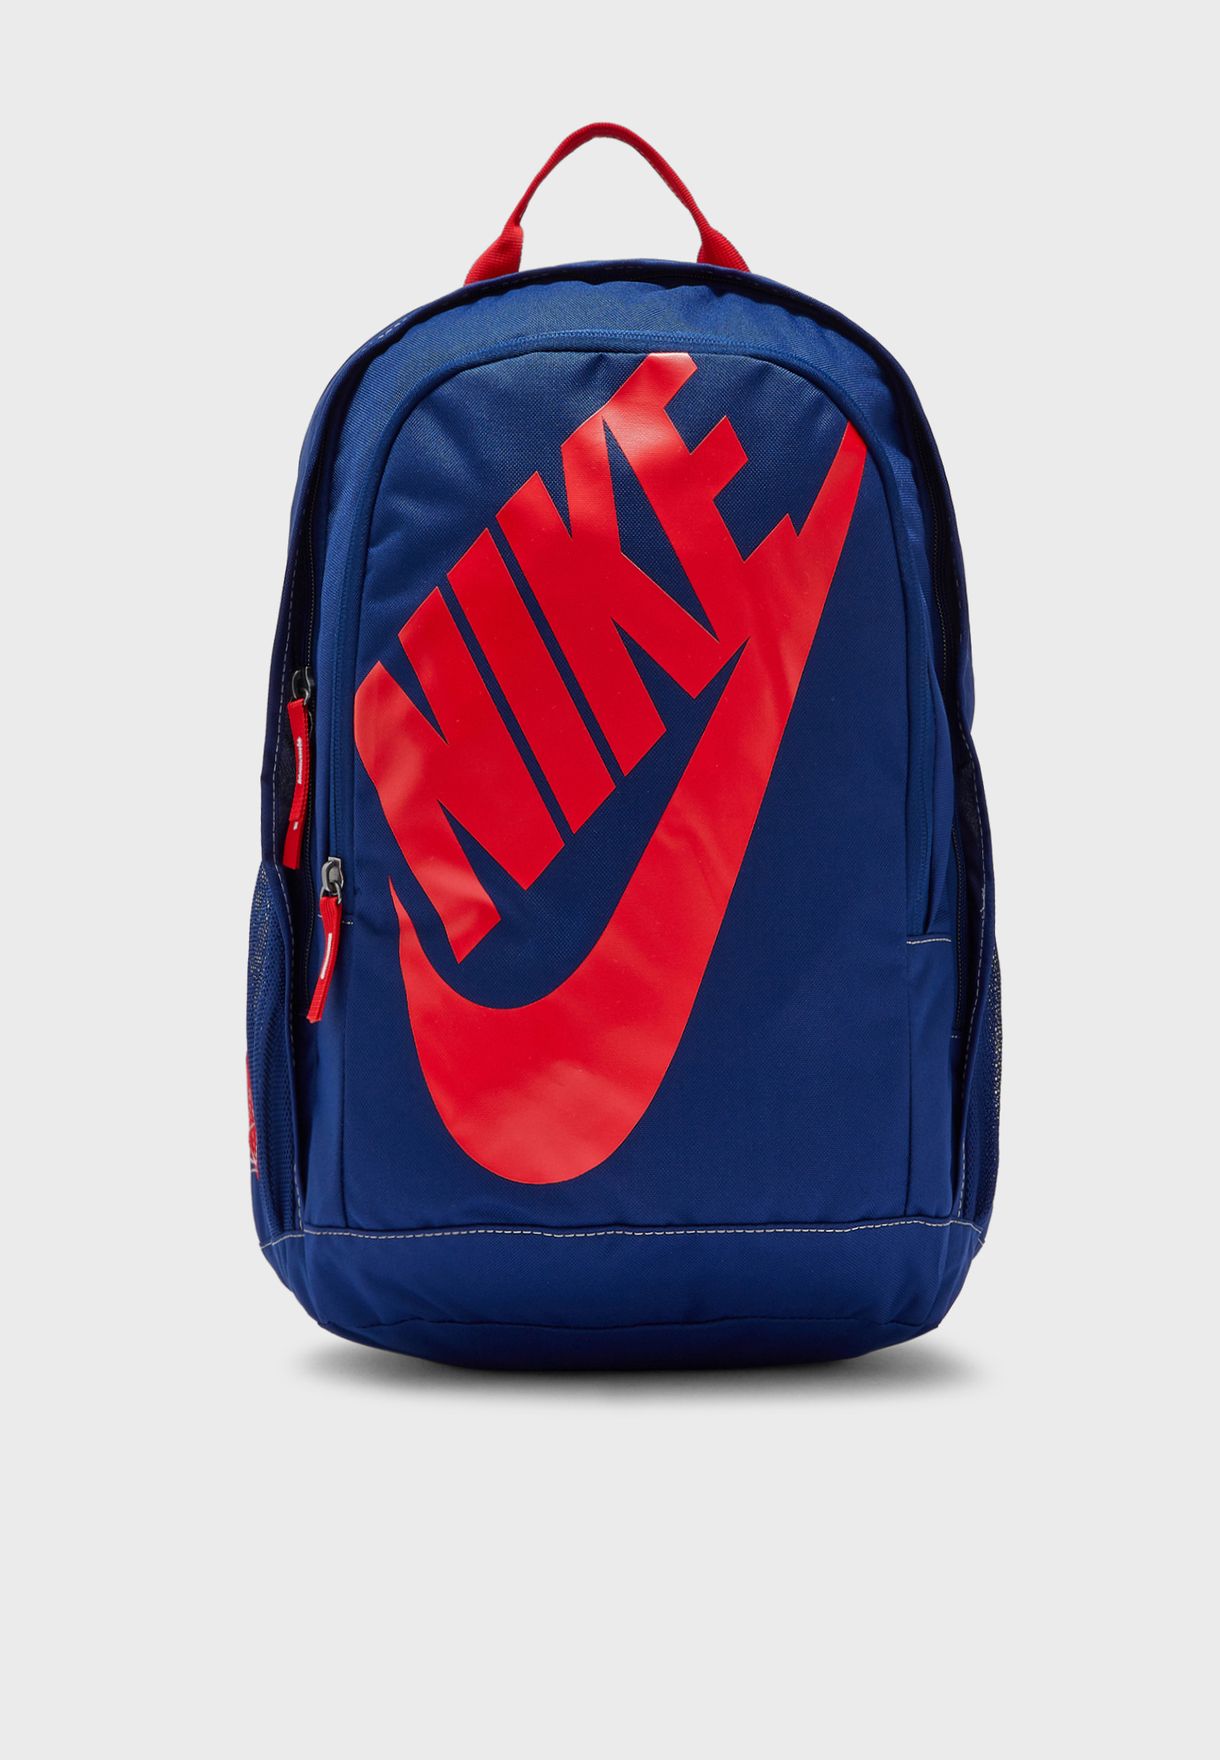 nike hayward futura backpack blue